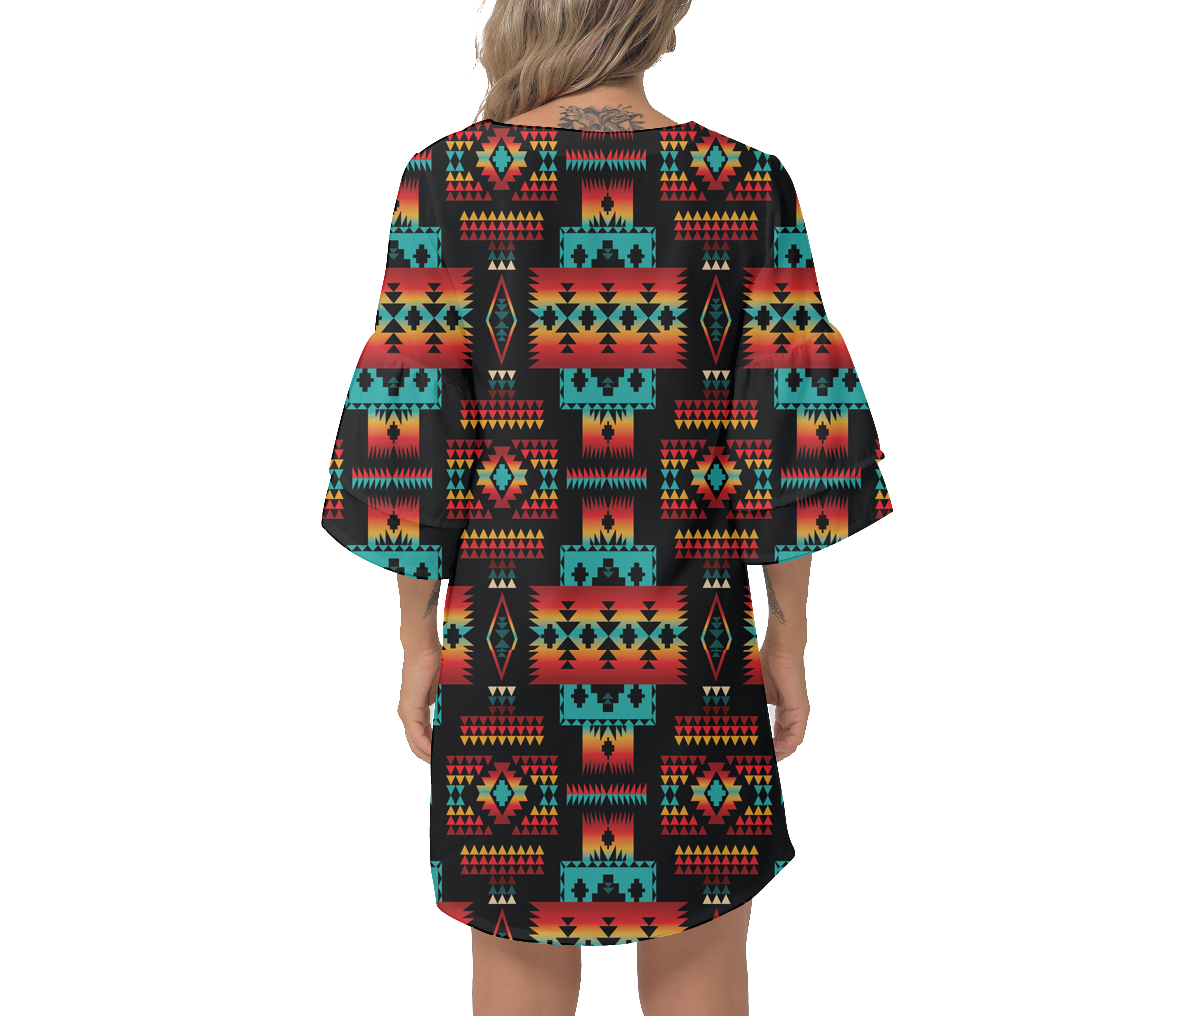 Powwow Storegb nat00046 02 native design print womens v neck dresss